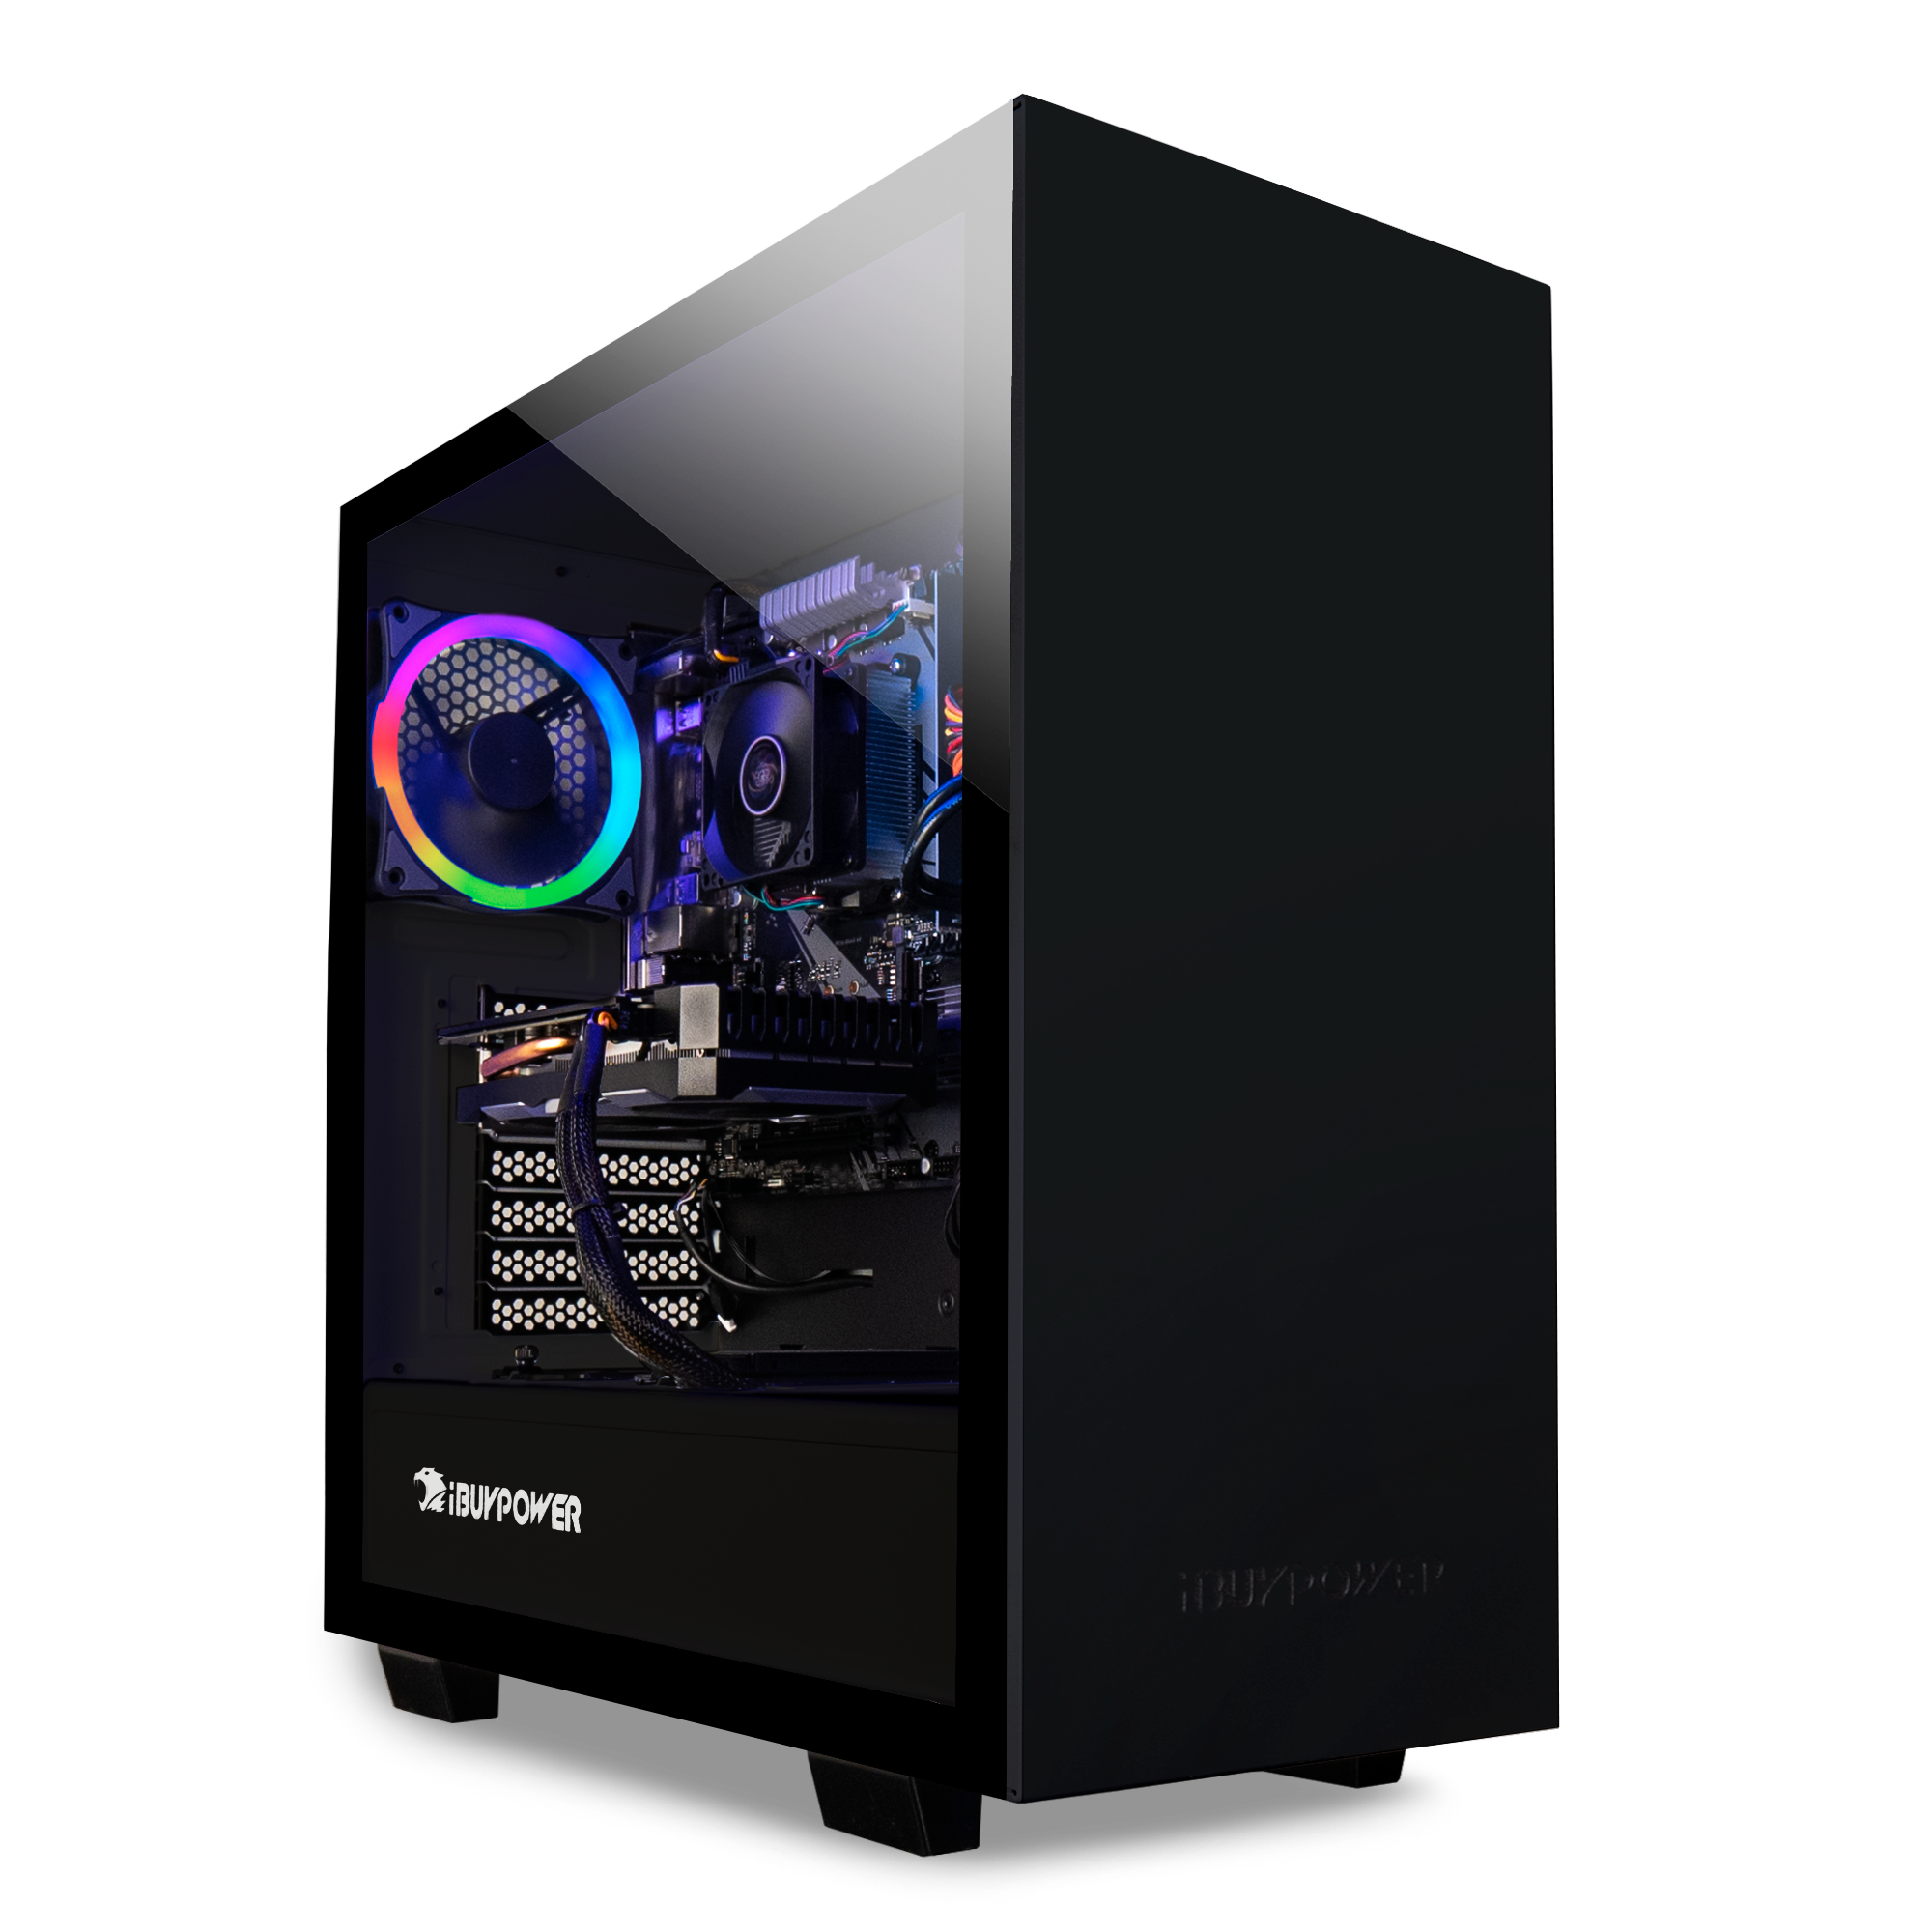 iBUYPOWER Gaming Desktop Tower, AMD Ryzen 3 2300X, 8GB DDR4 2666 RAM, NVIDIA GeForce GT1030, 1TB HDD, Windows 10 Home, Black, WA563GT4 - image 2 of 6